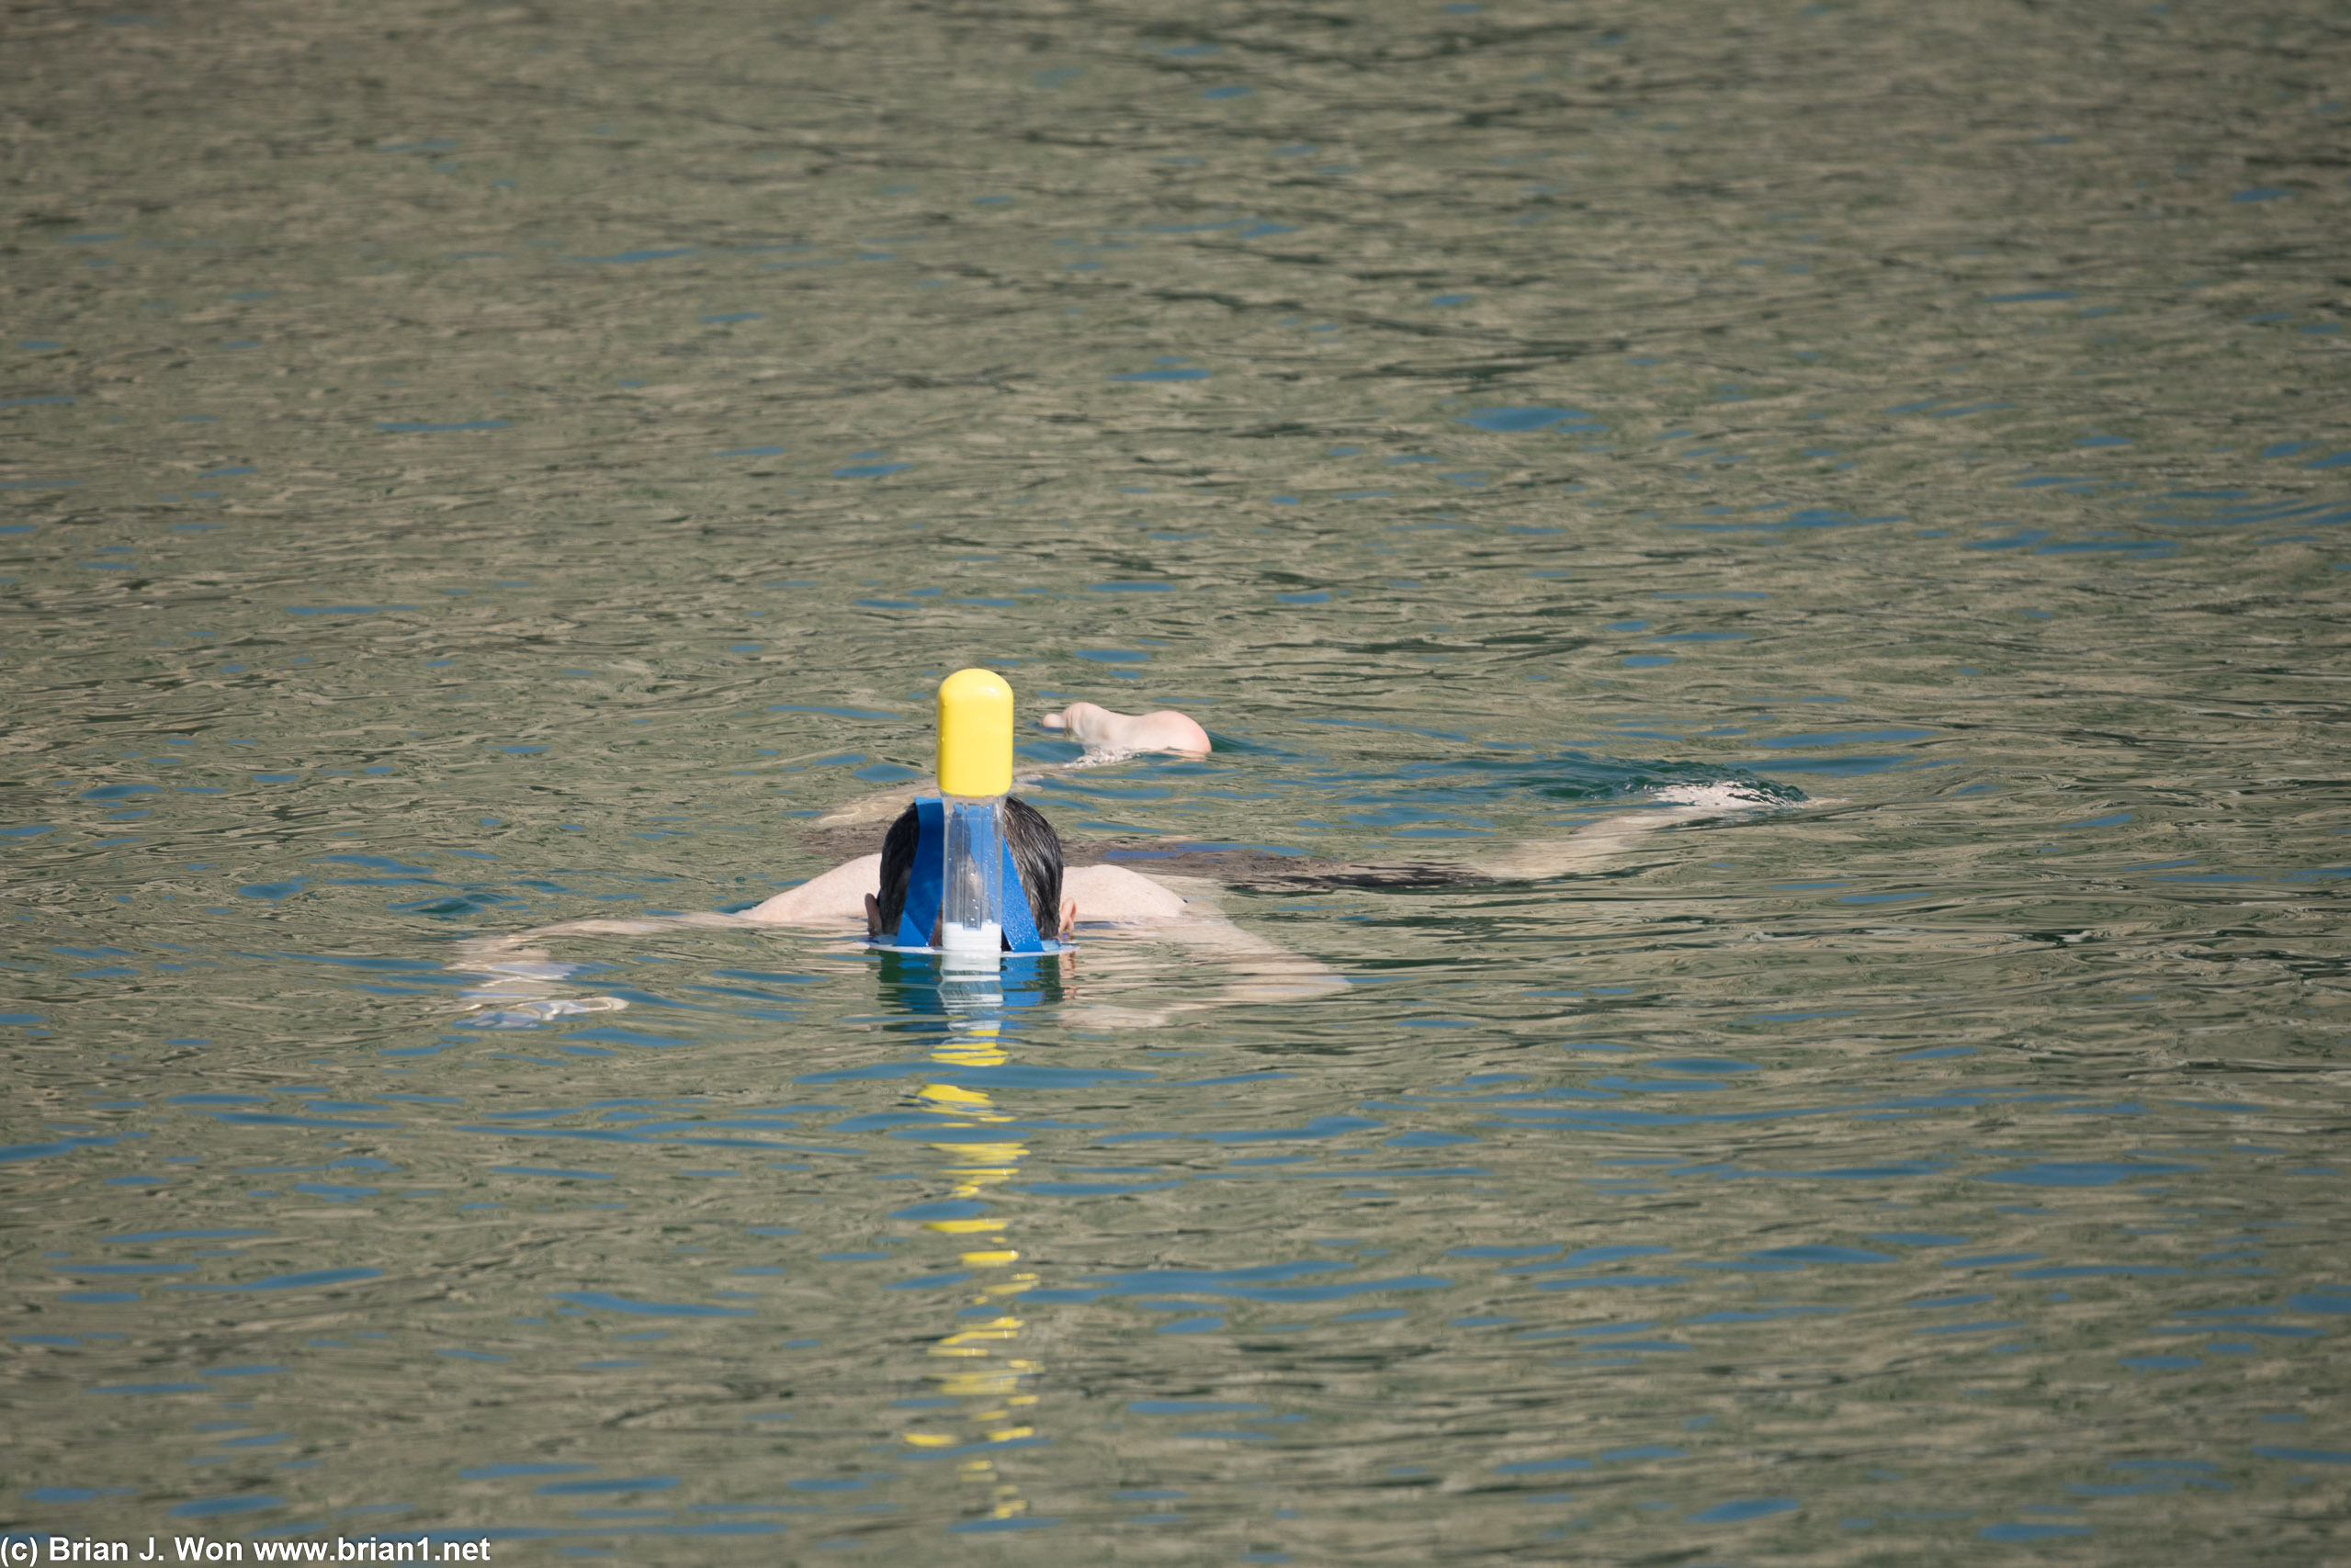 Rick snorkeling. Water was super buoyant.